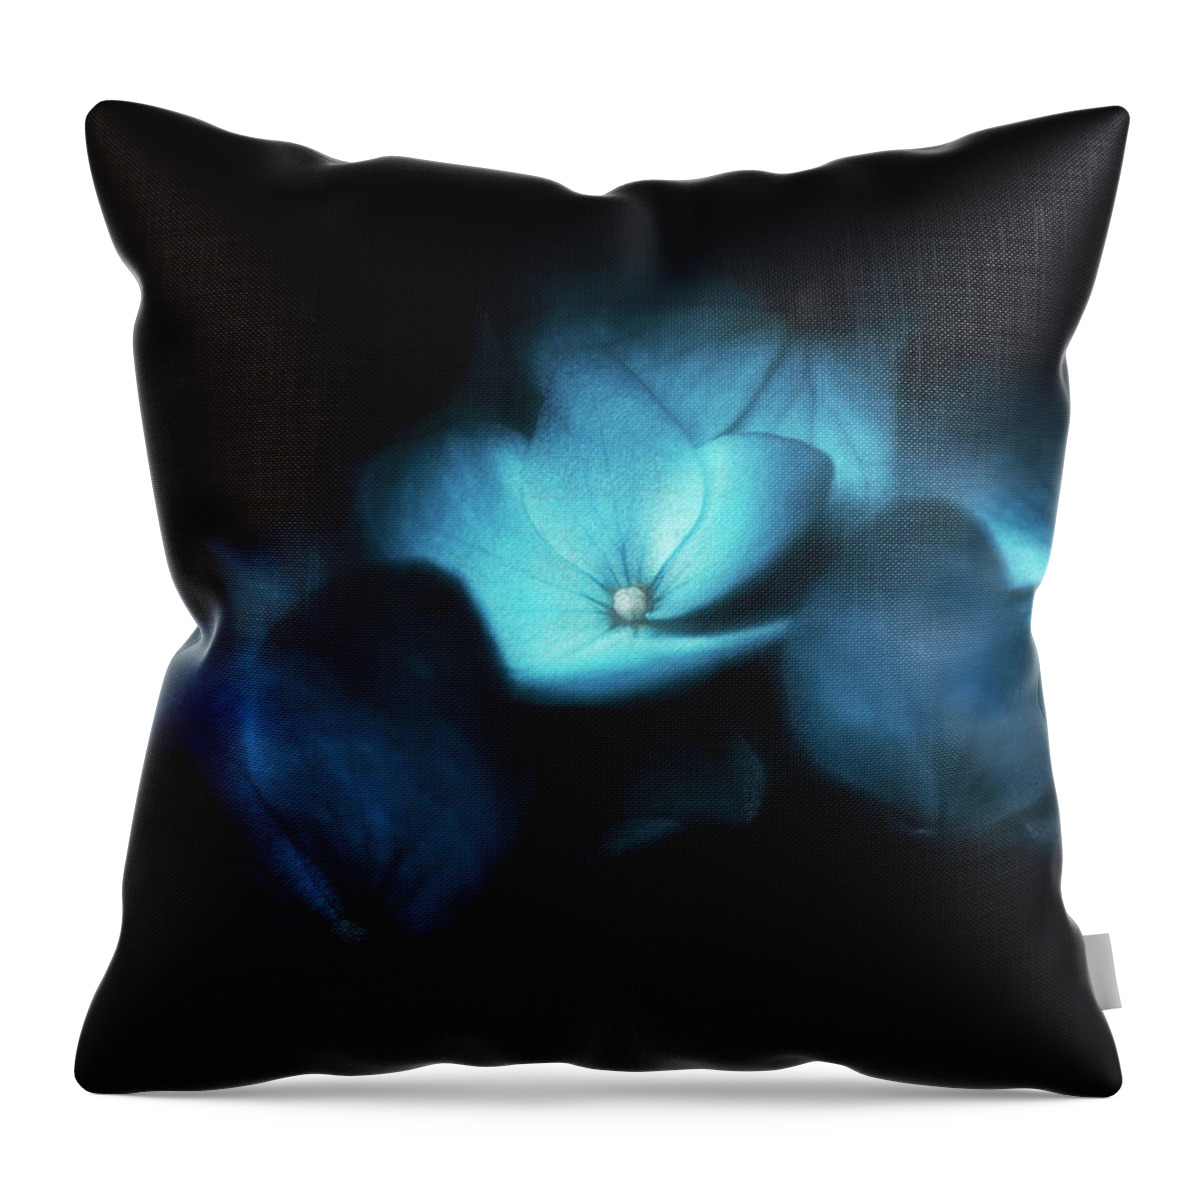 Hydrangeas Throw Pillow featuring the photograph Blue hydrangeas by Philippe Sainte-Laudy